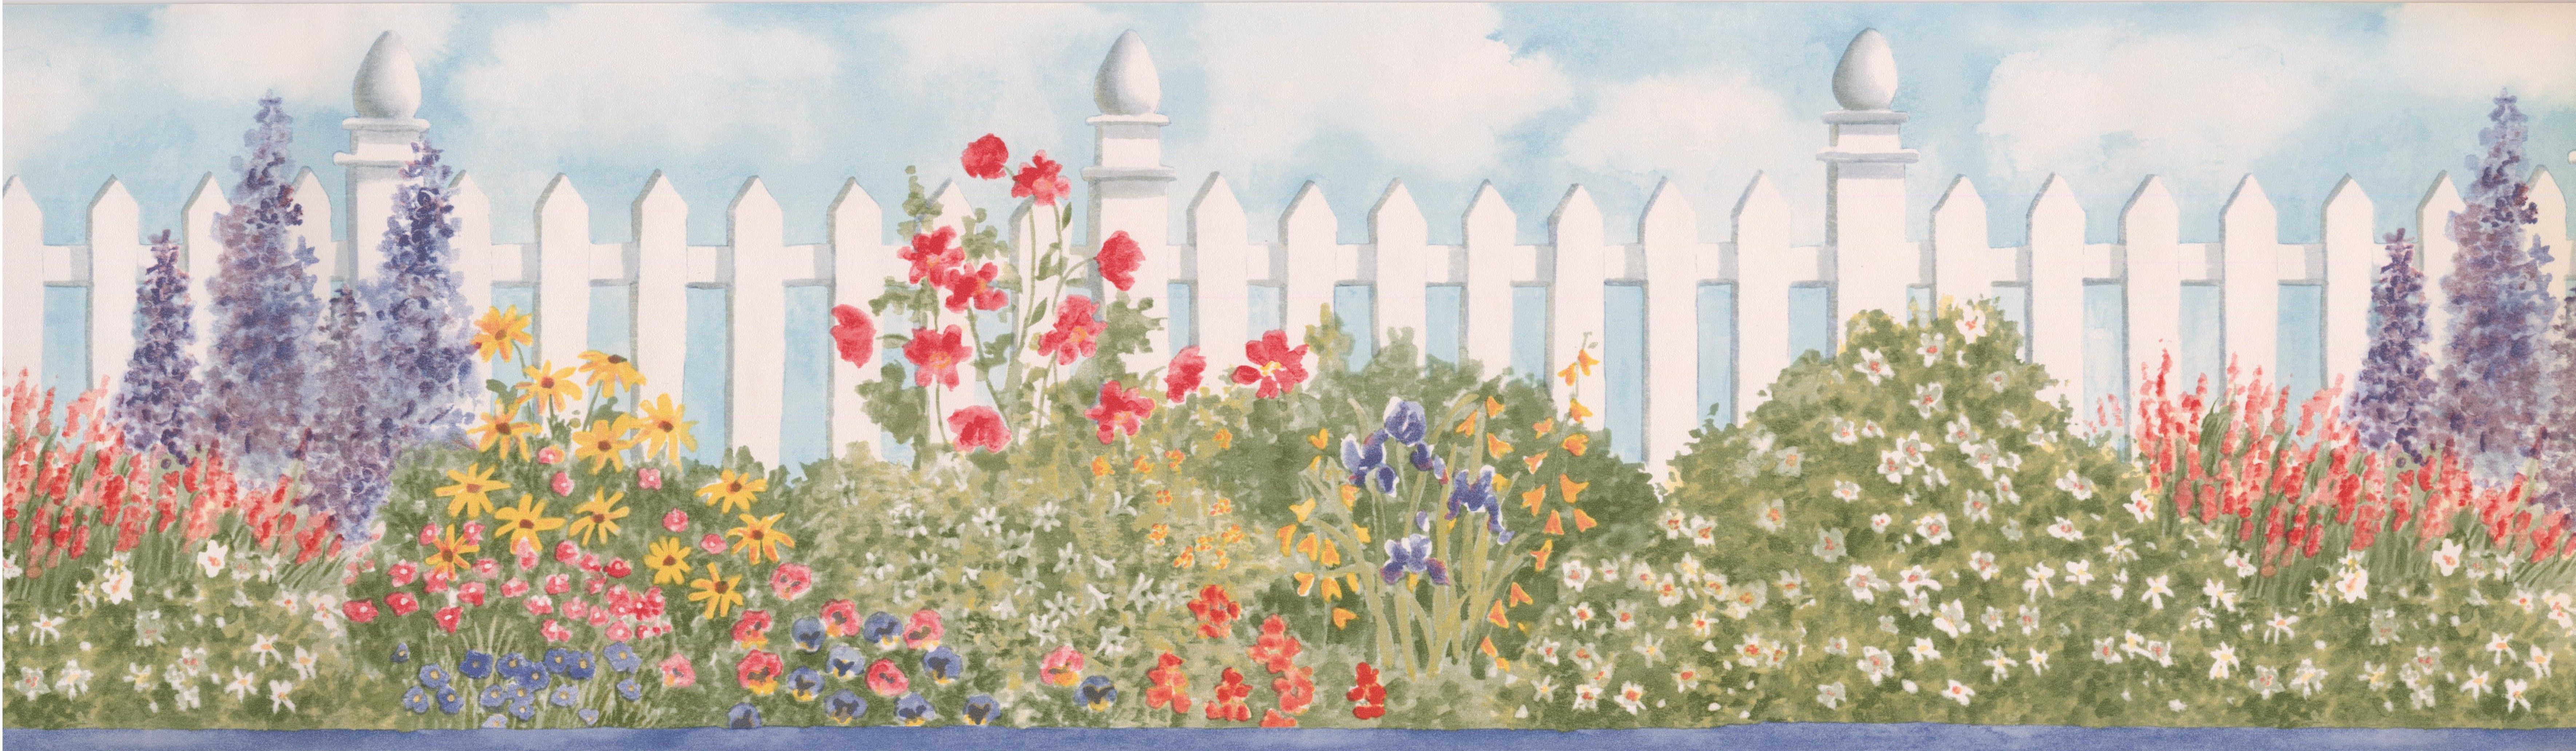 Retro Art Fence Floral Wallpaper Border' x 6.87